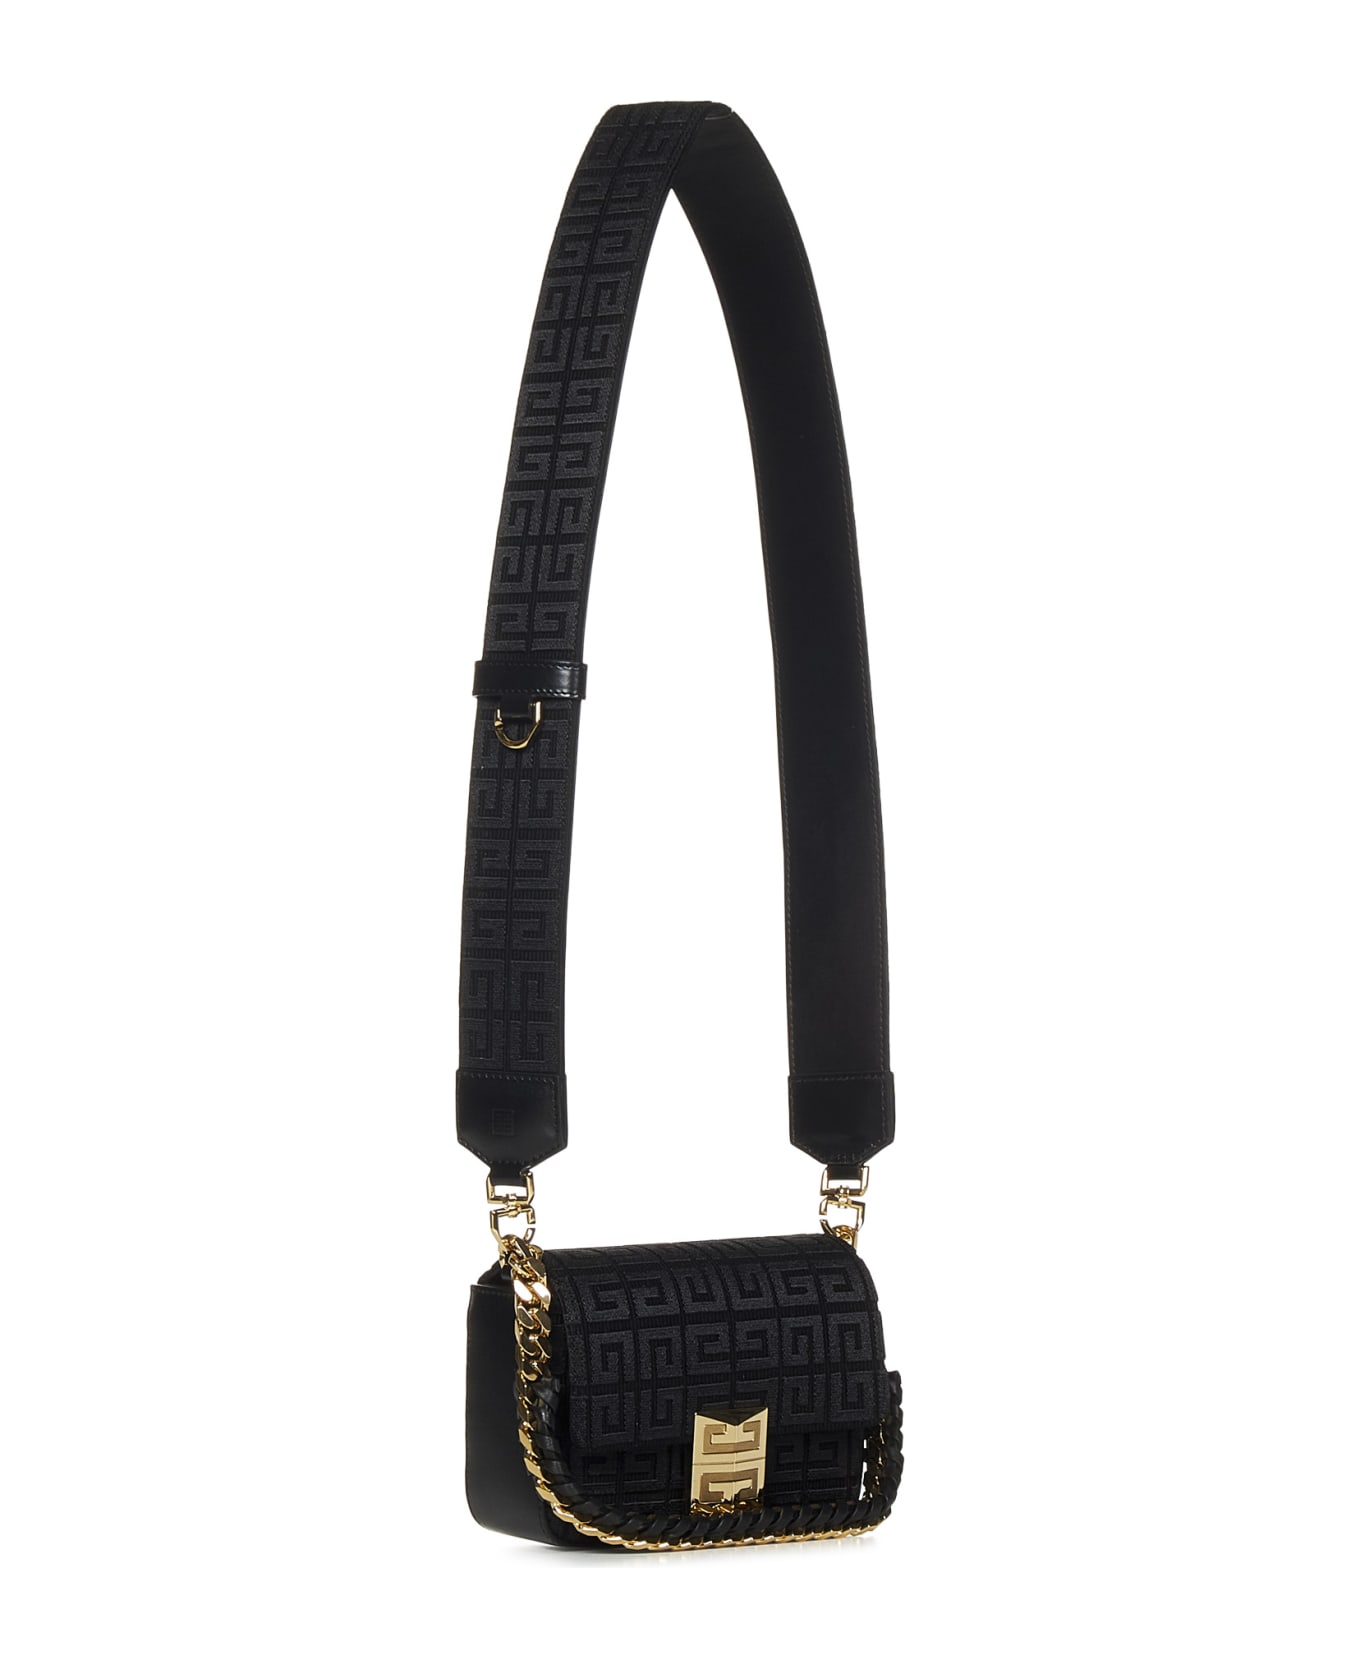 Givenchy 4g Small Shoulder Bag - Black